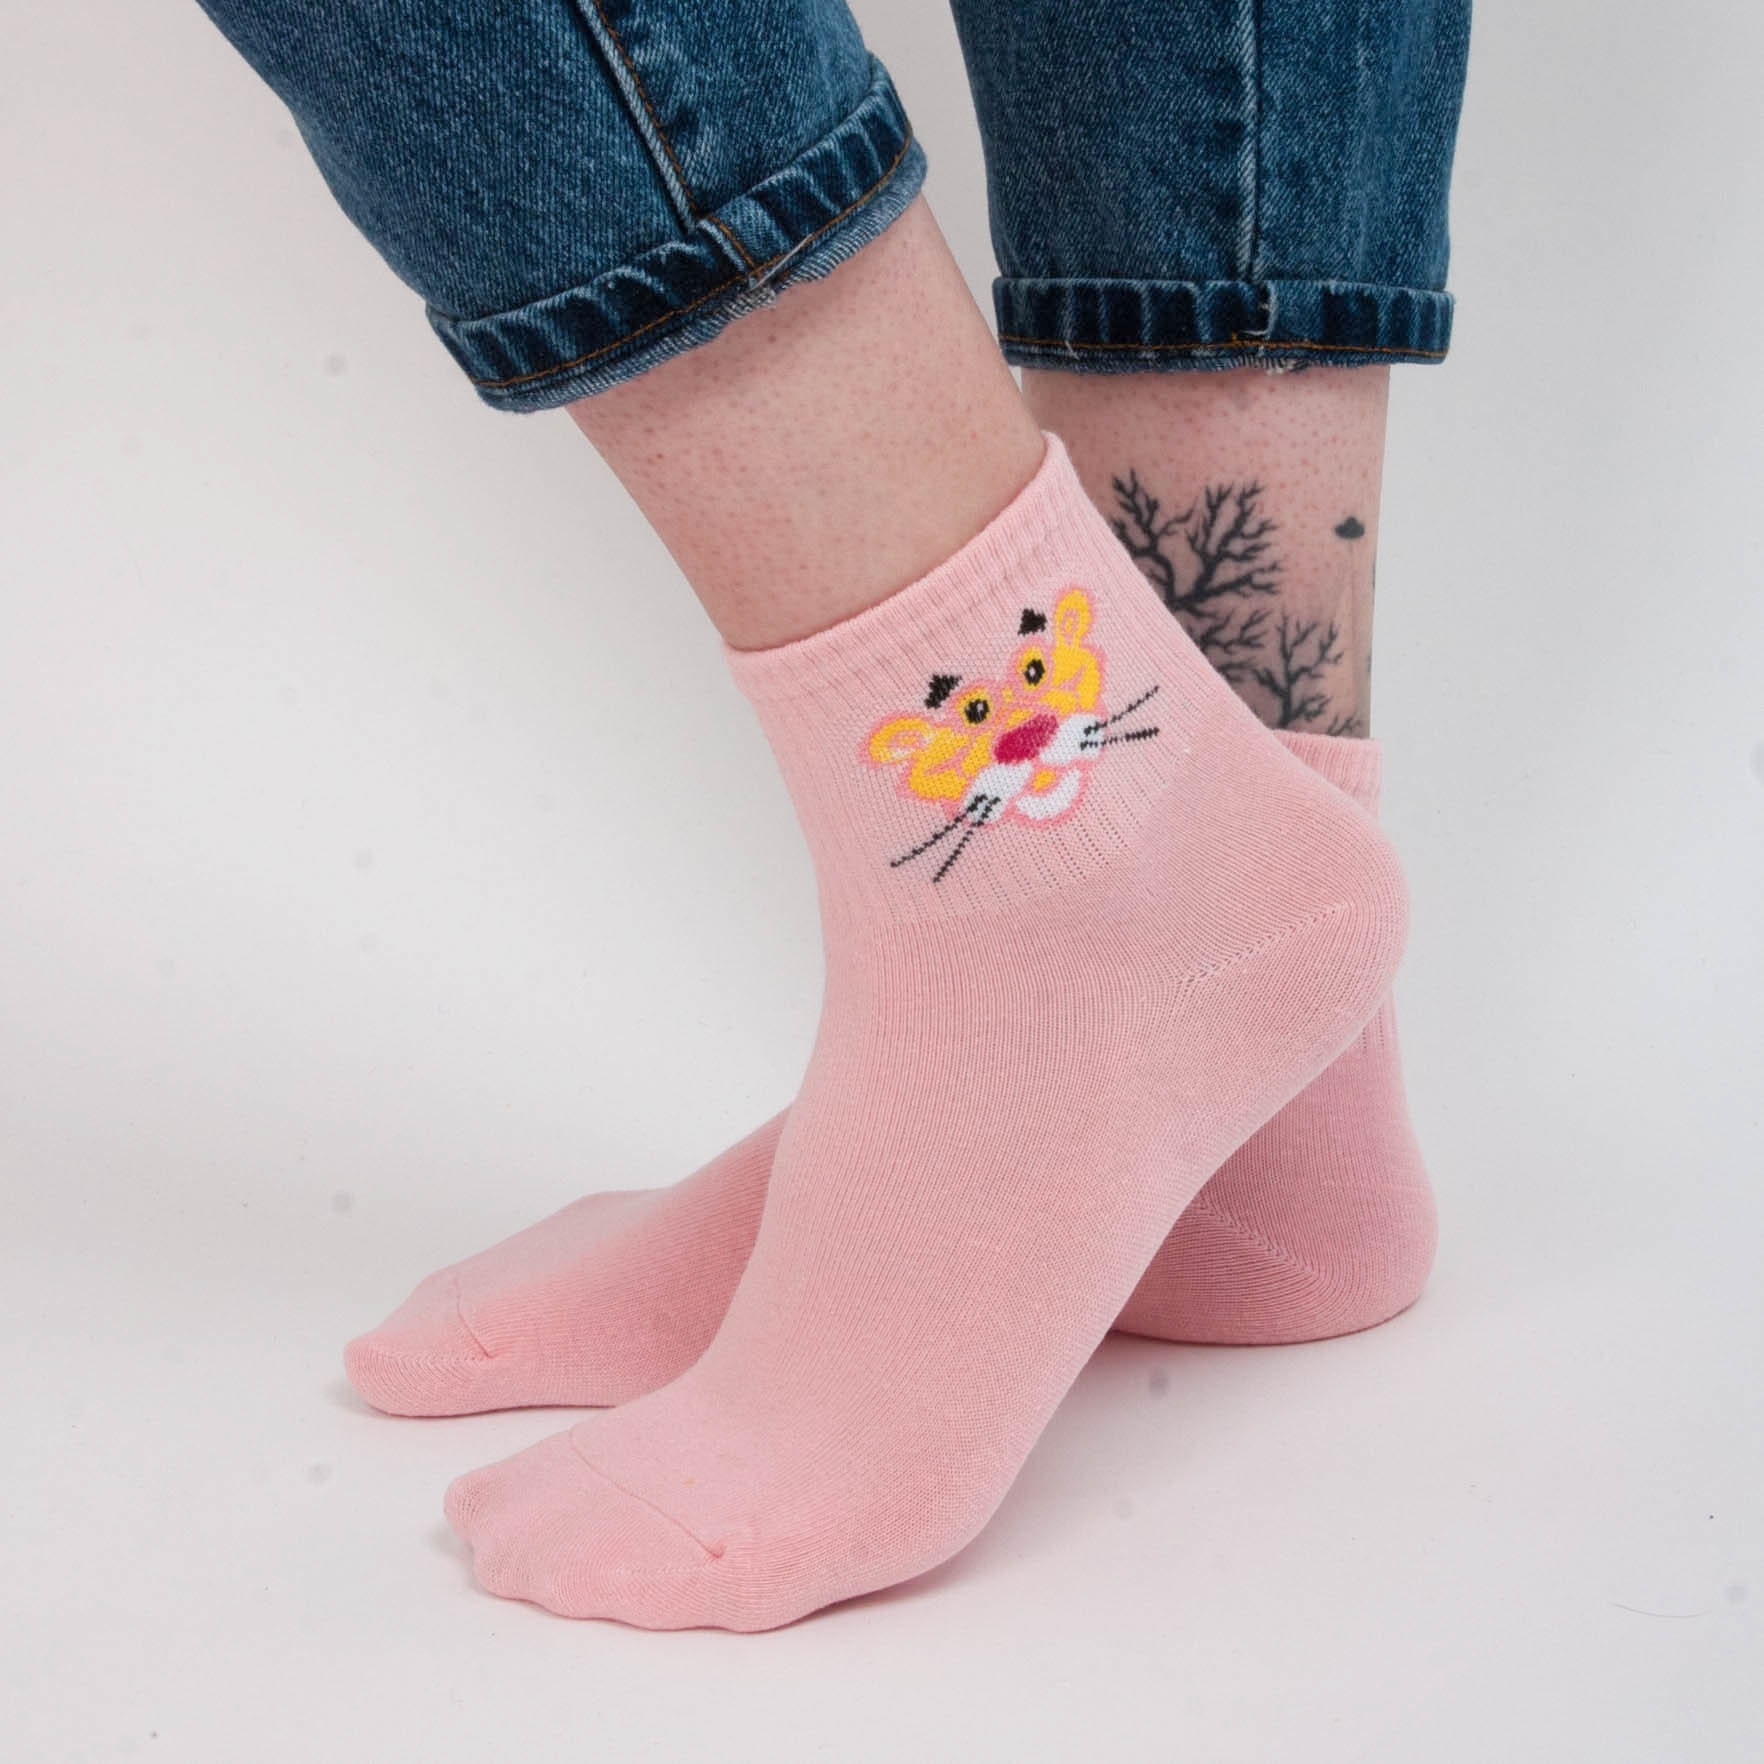 Smiley Socks Skate Socks Funny Socks Cartoon Socks Cotton Socks Cute Socks  Monster Socks Happy Socks Face Pattern Socks 